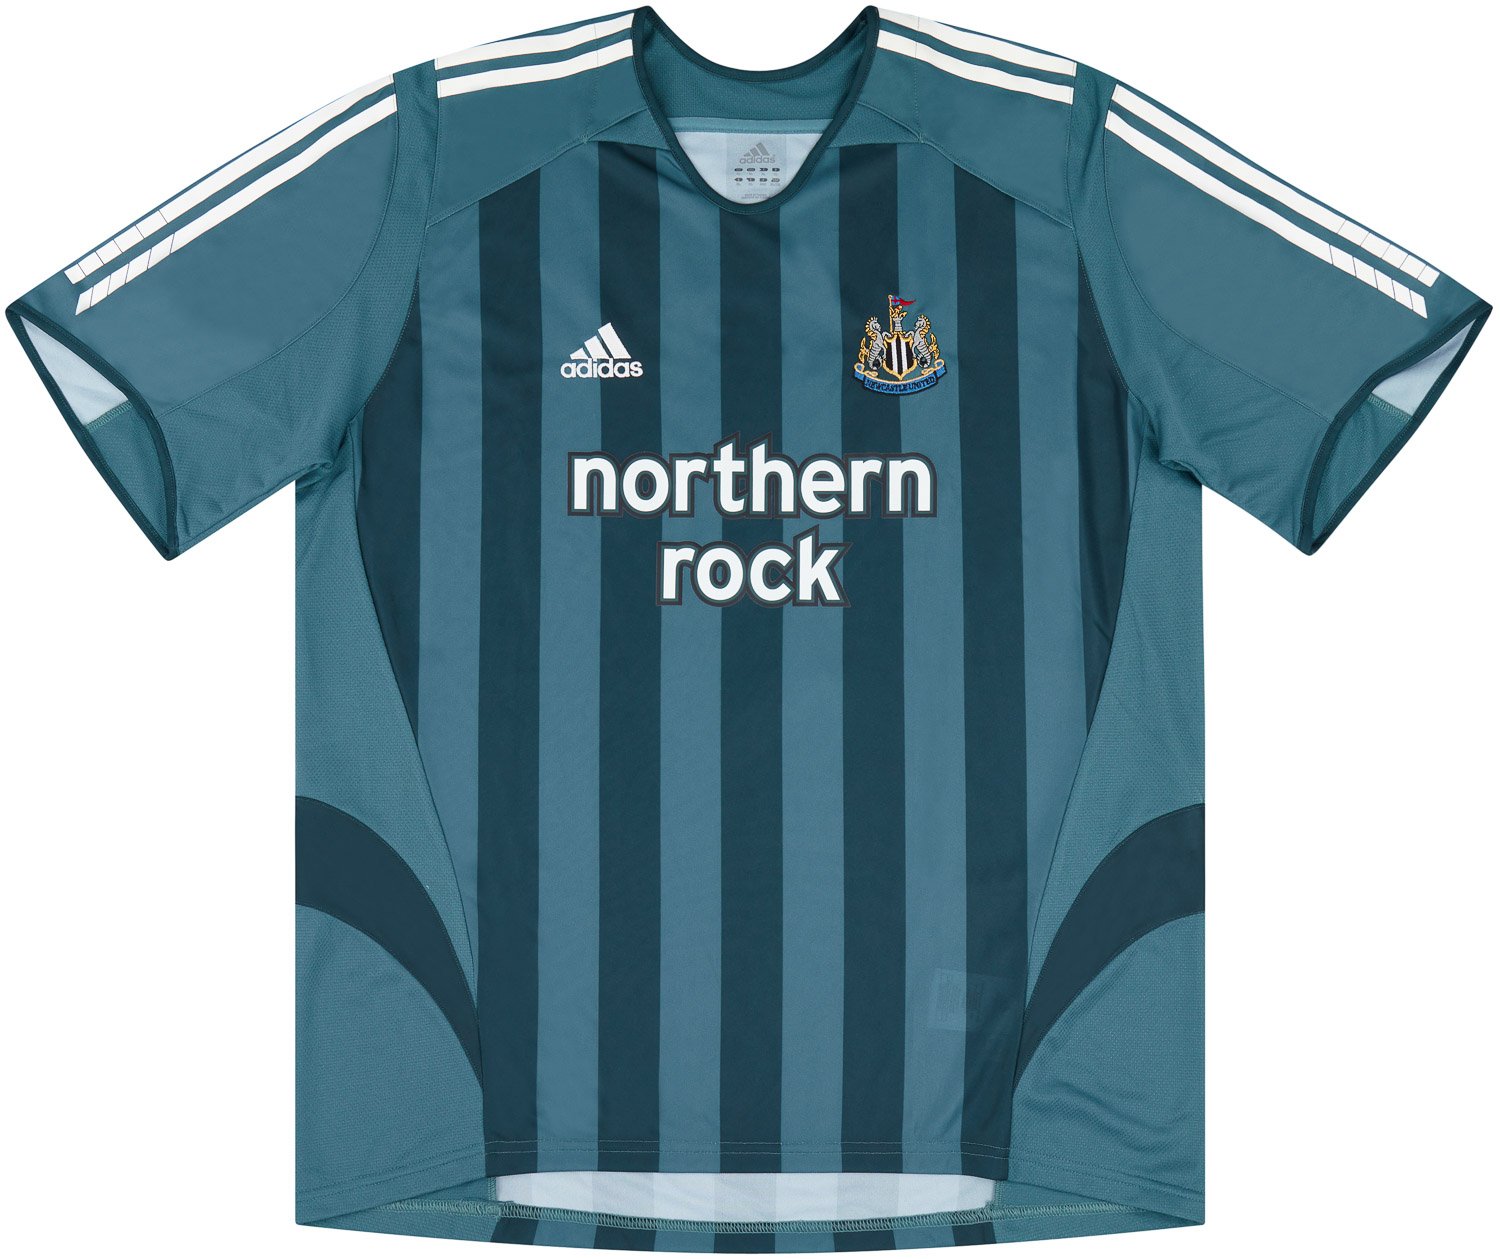 Newcastle Away football shirt 2005 - 2006. Sponsored by Northern Rock